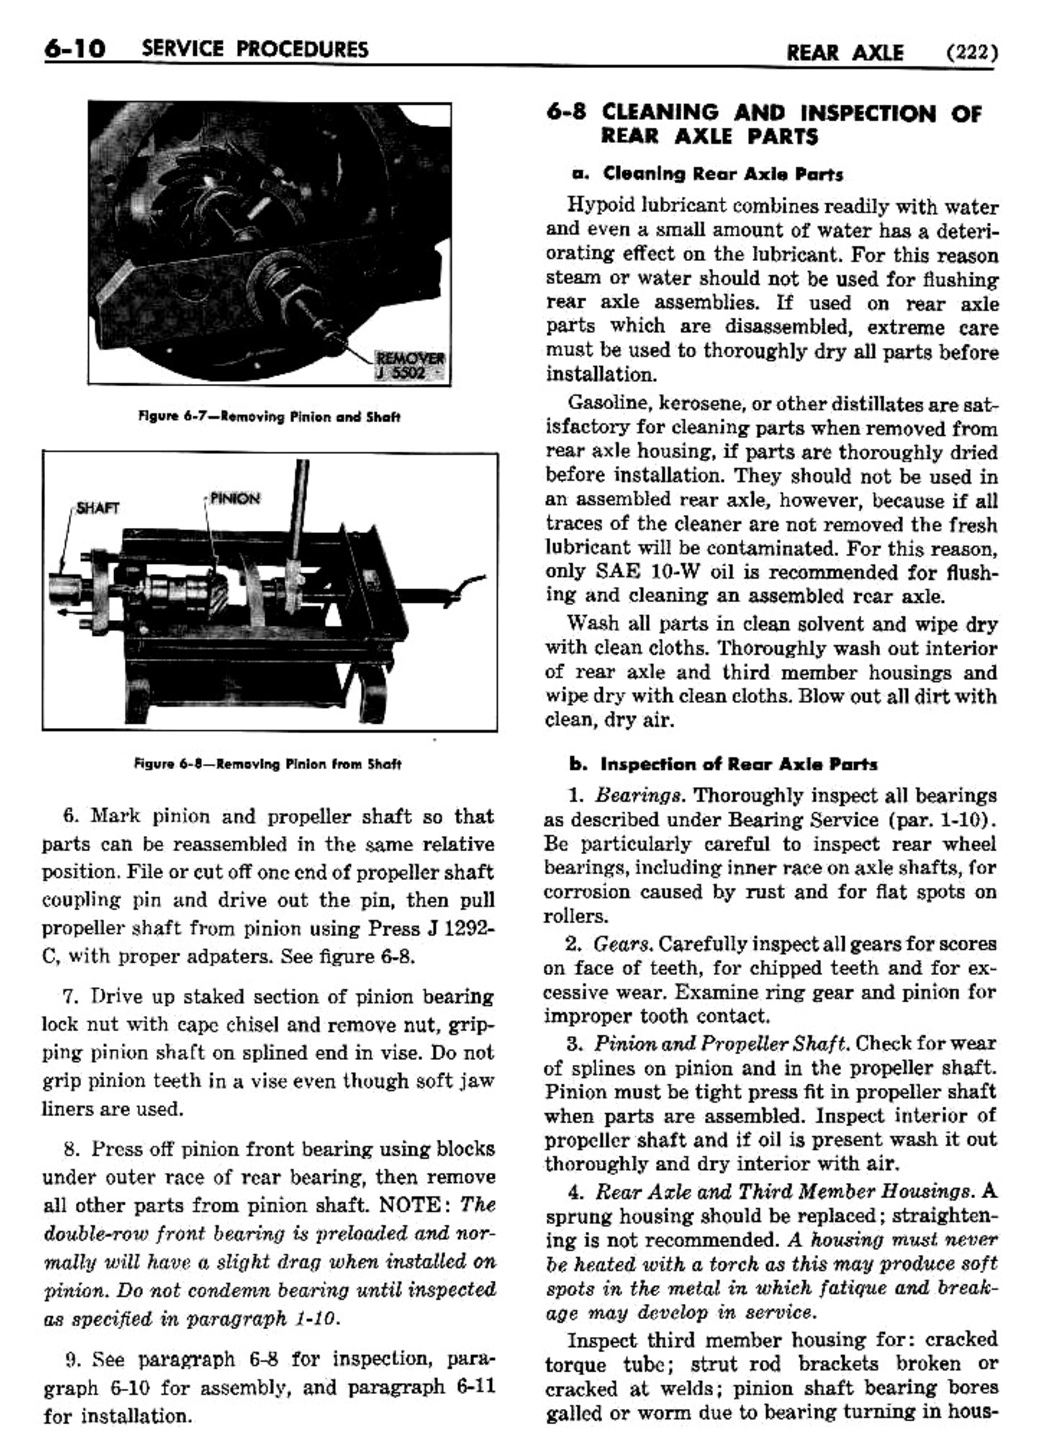 n_07 1954 Buick Shop Manual - Rear Axle-010-010.jpg